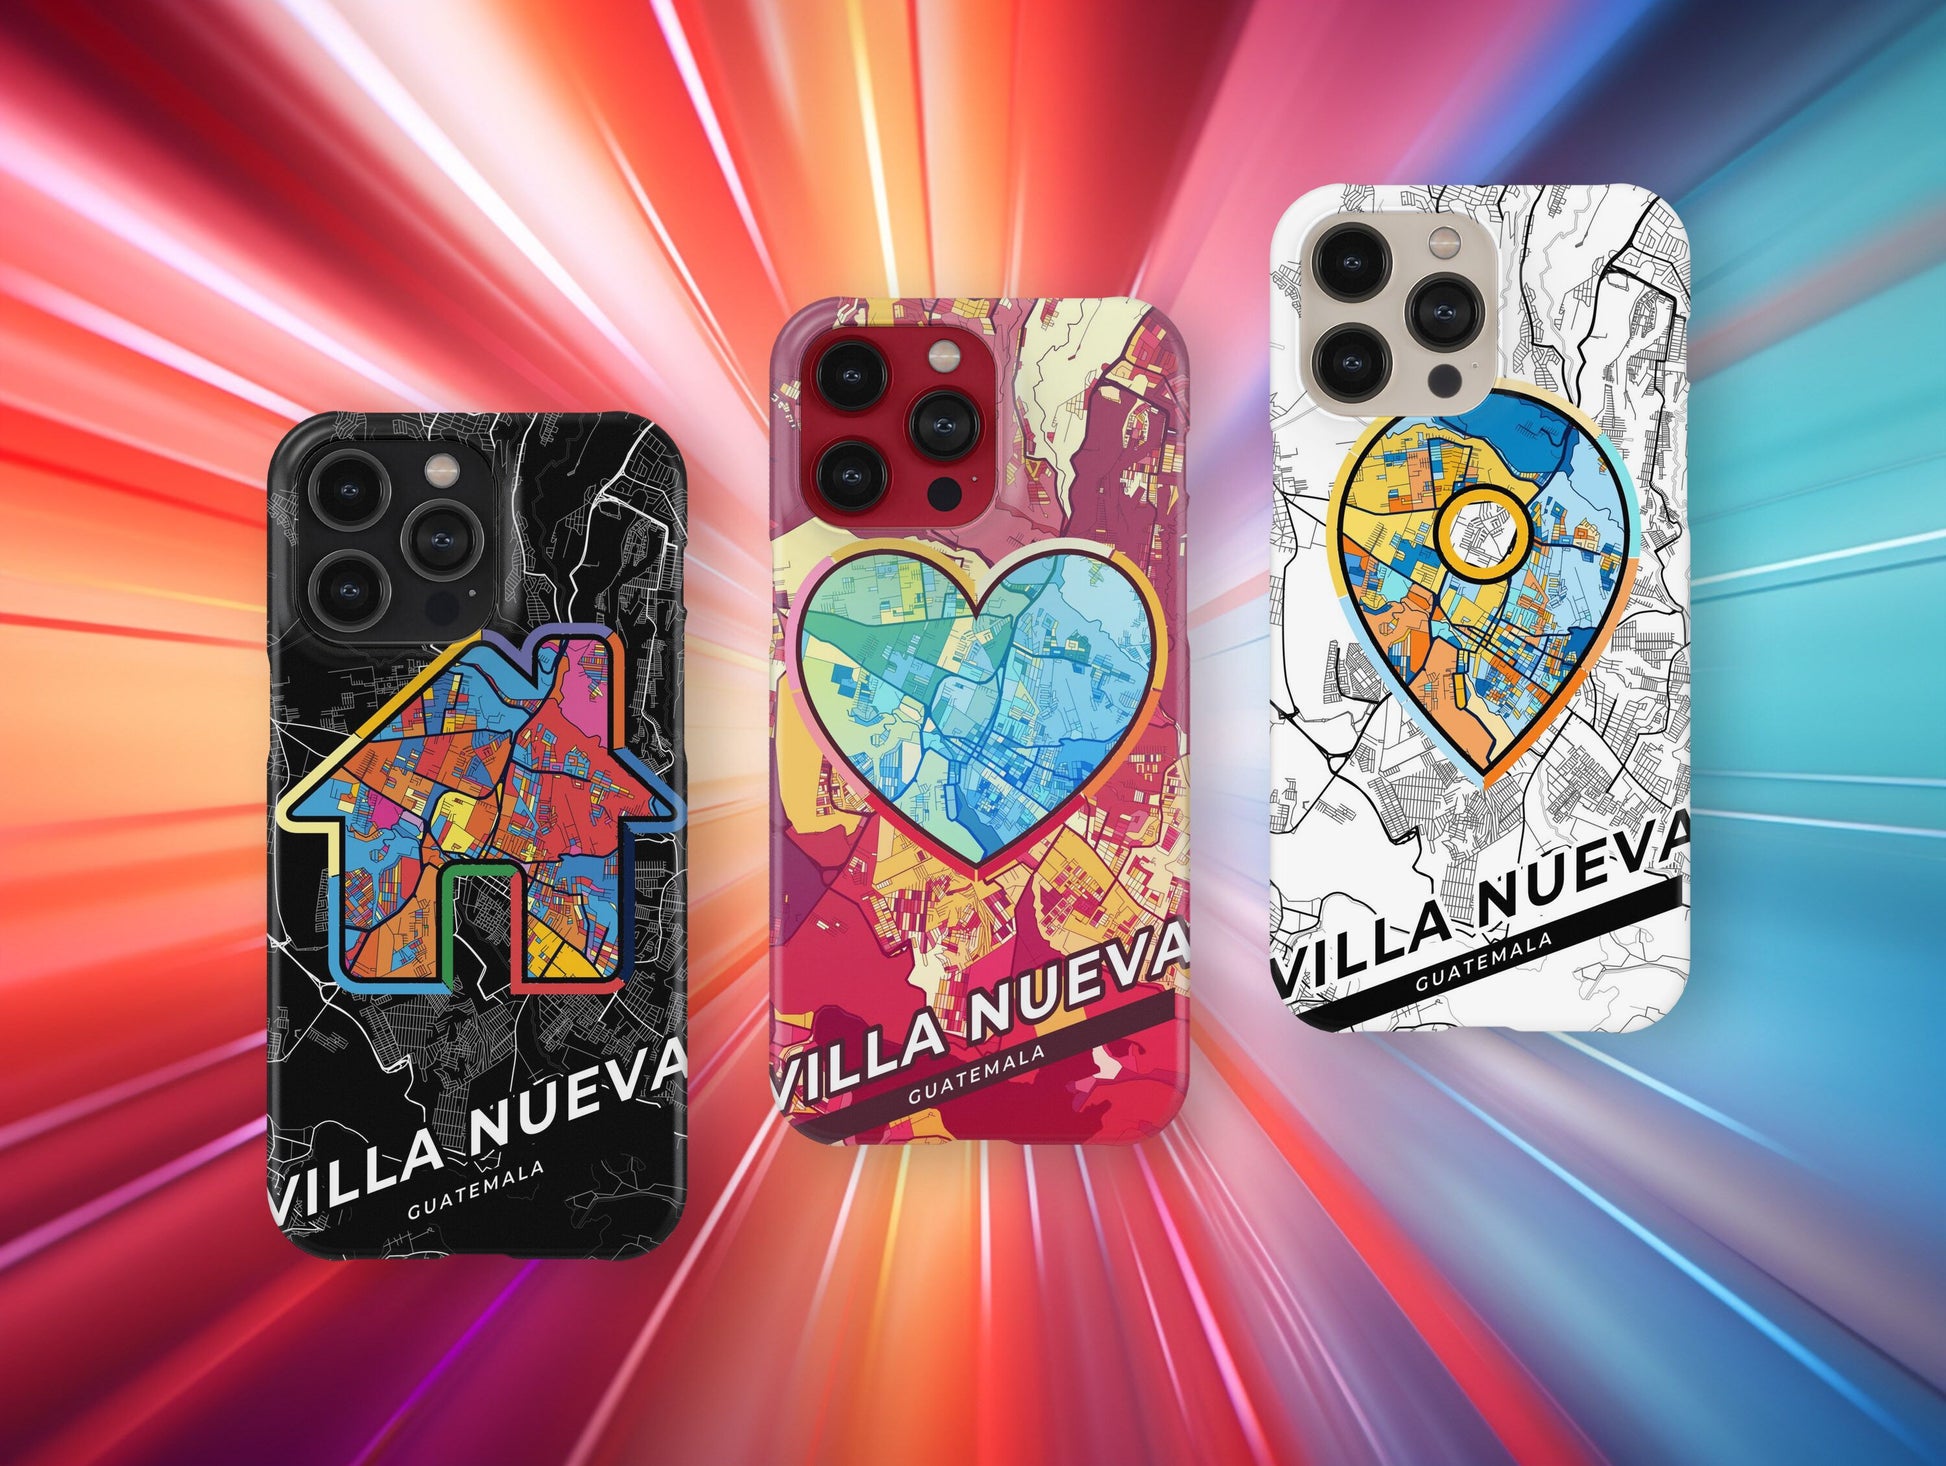 Villa Nueva Guatemala slim phone case with colorful icon